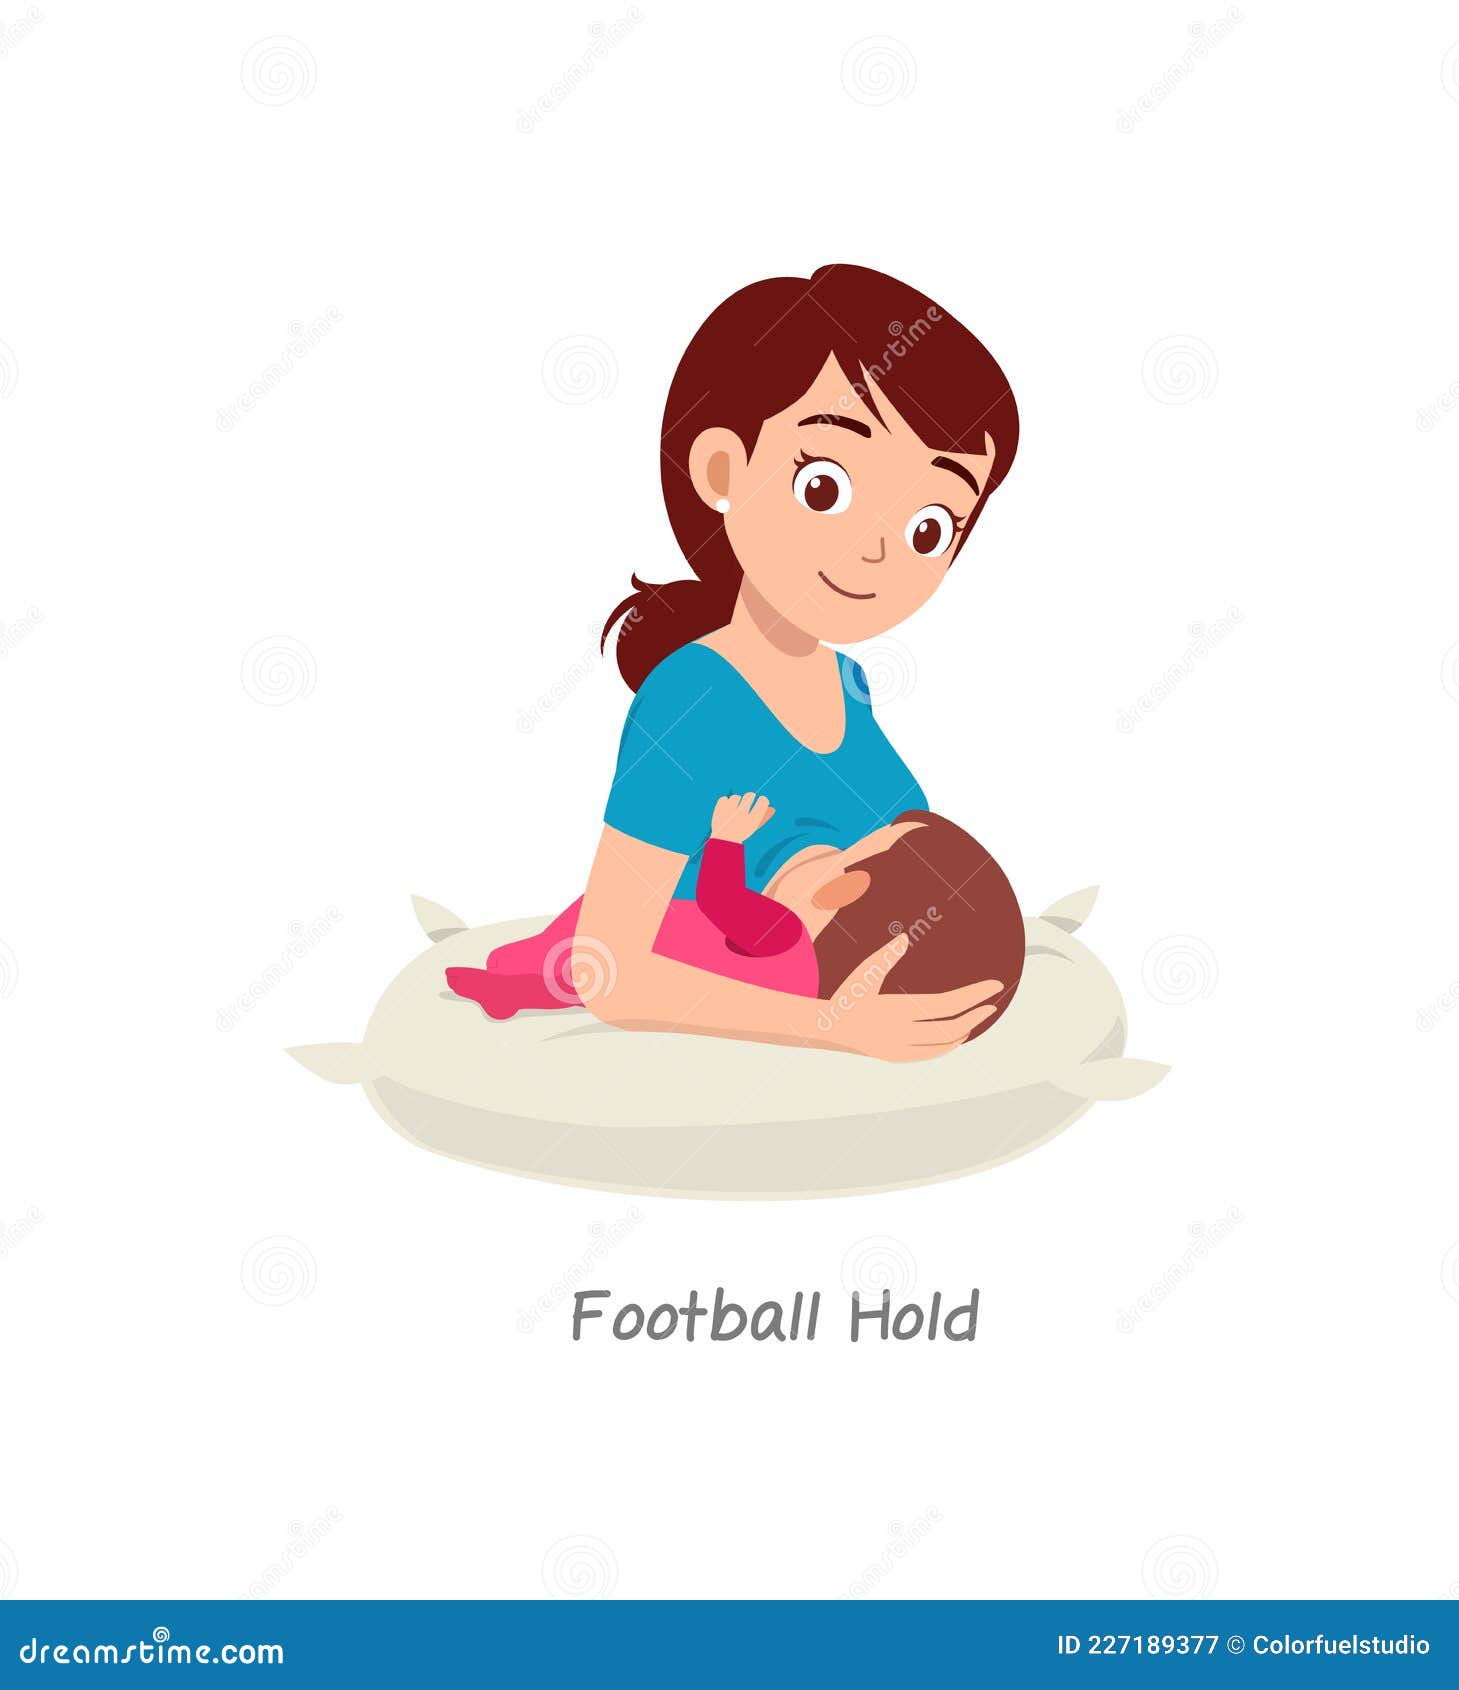 How To Do Every Breastfeeding Position — Milkology®